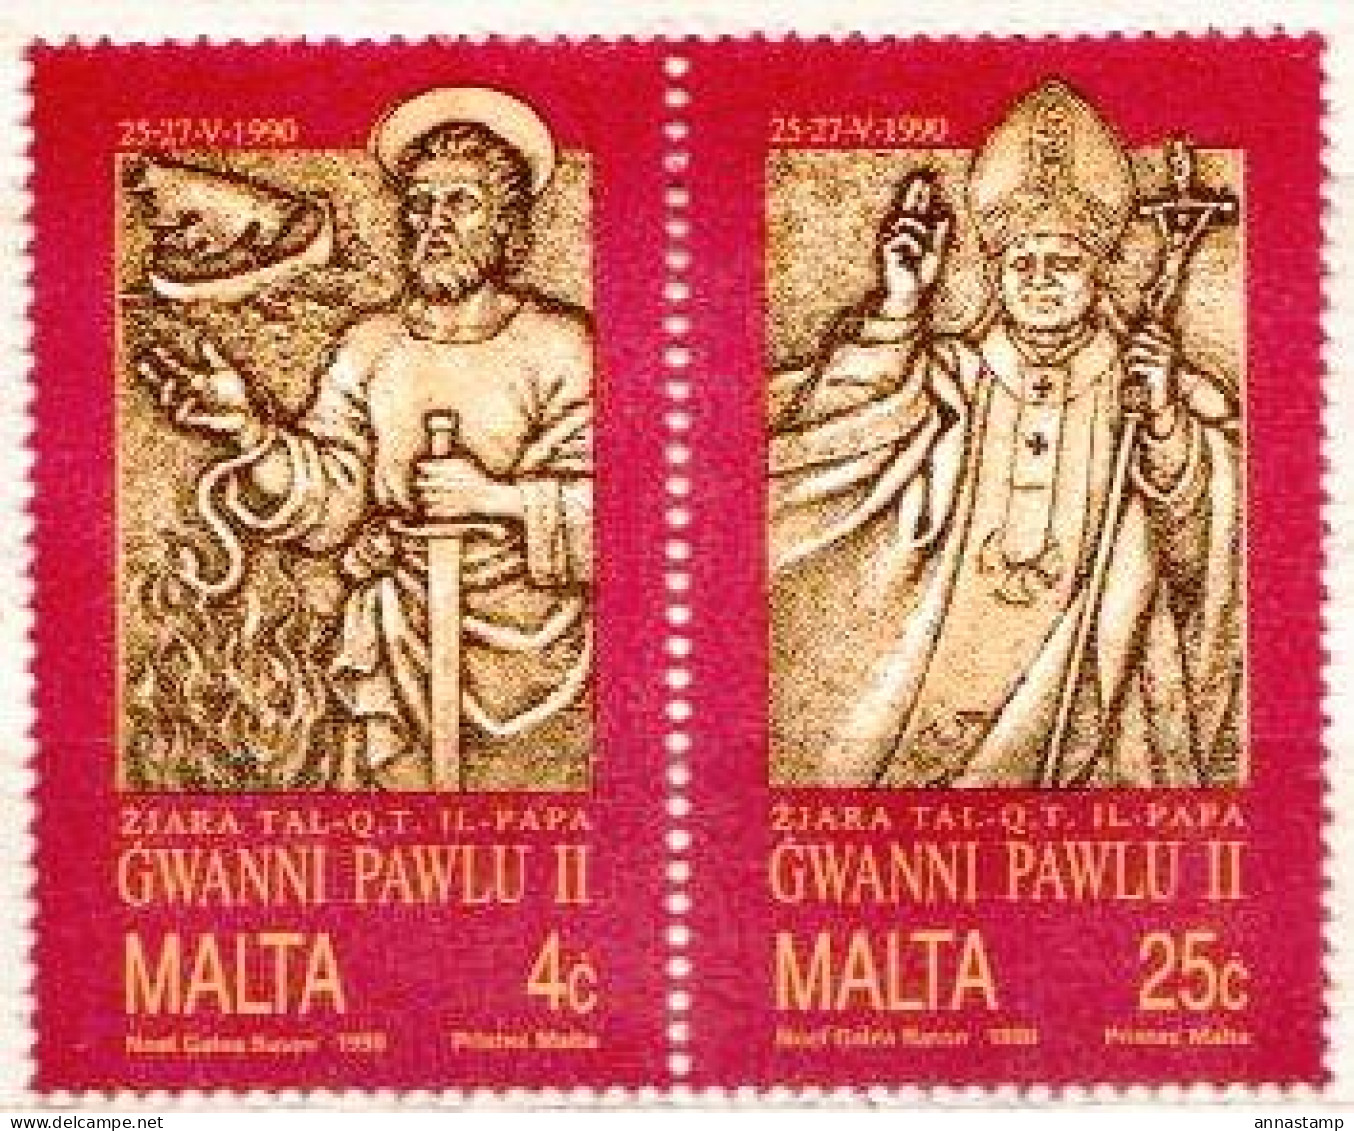 Malta MNH Set - Popes